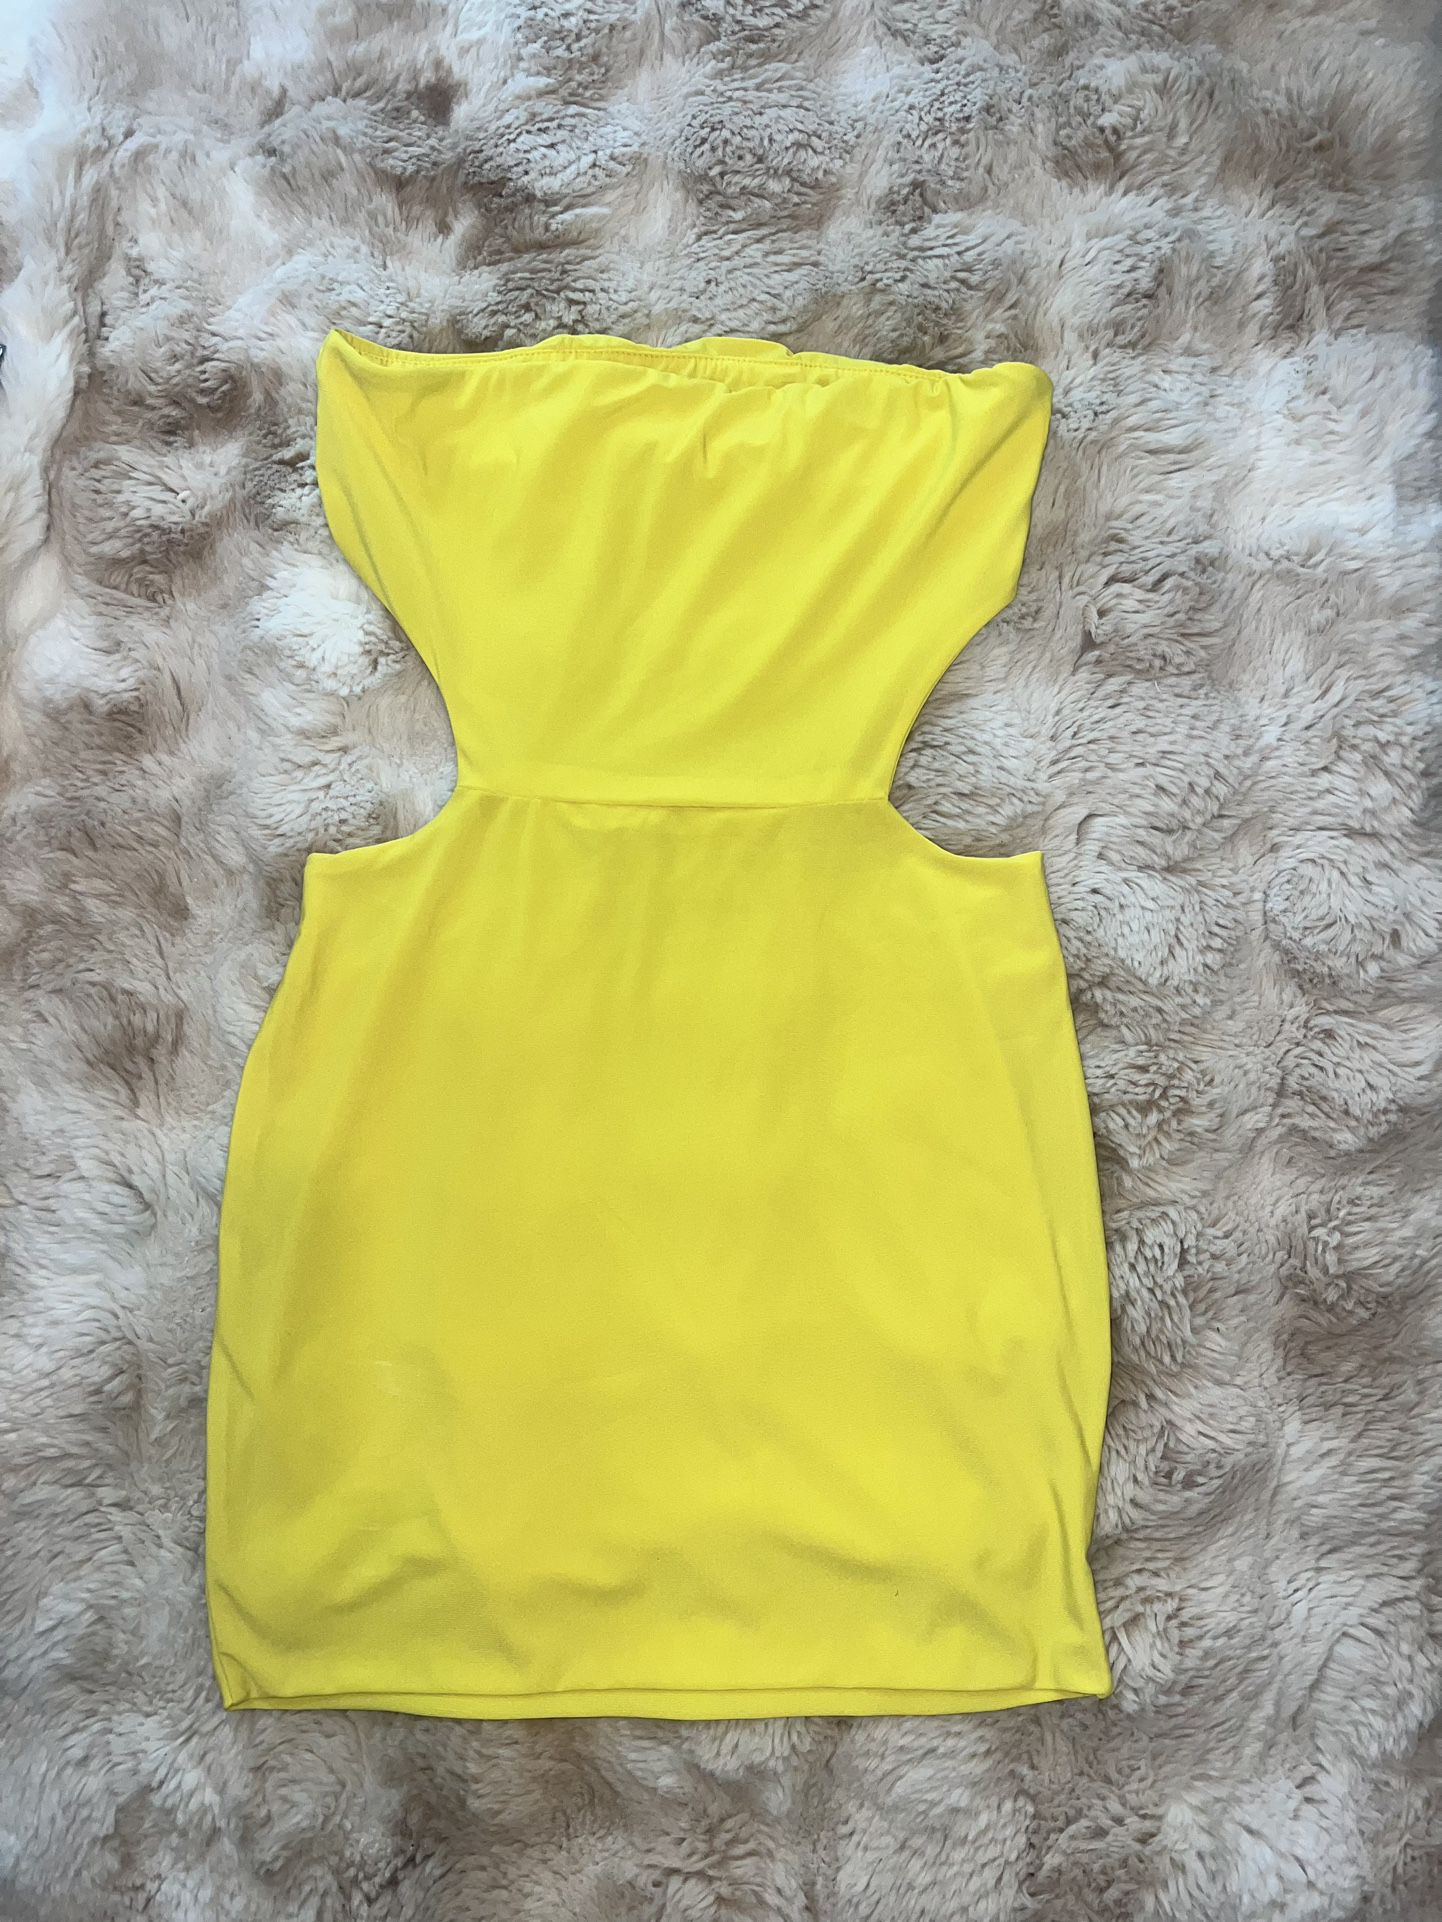 fashion nova yellow tube dress size Medium 